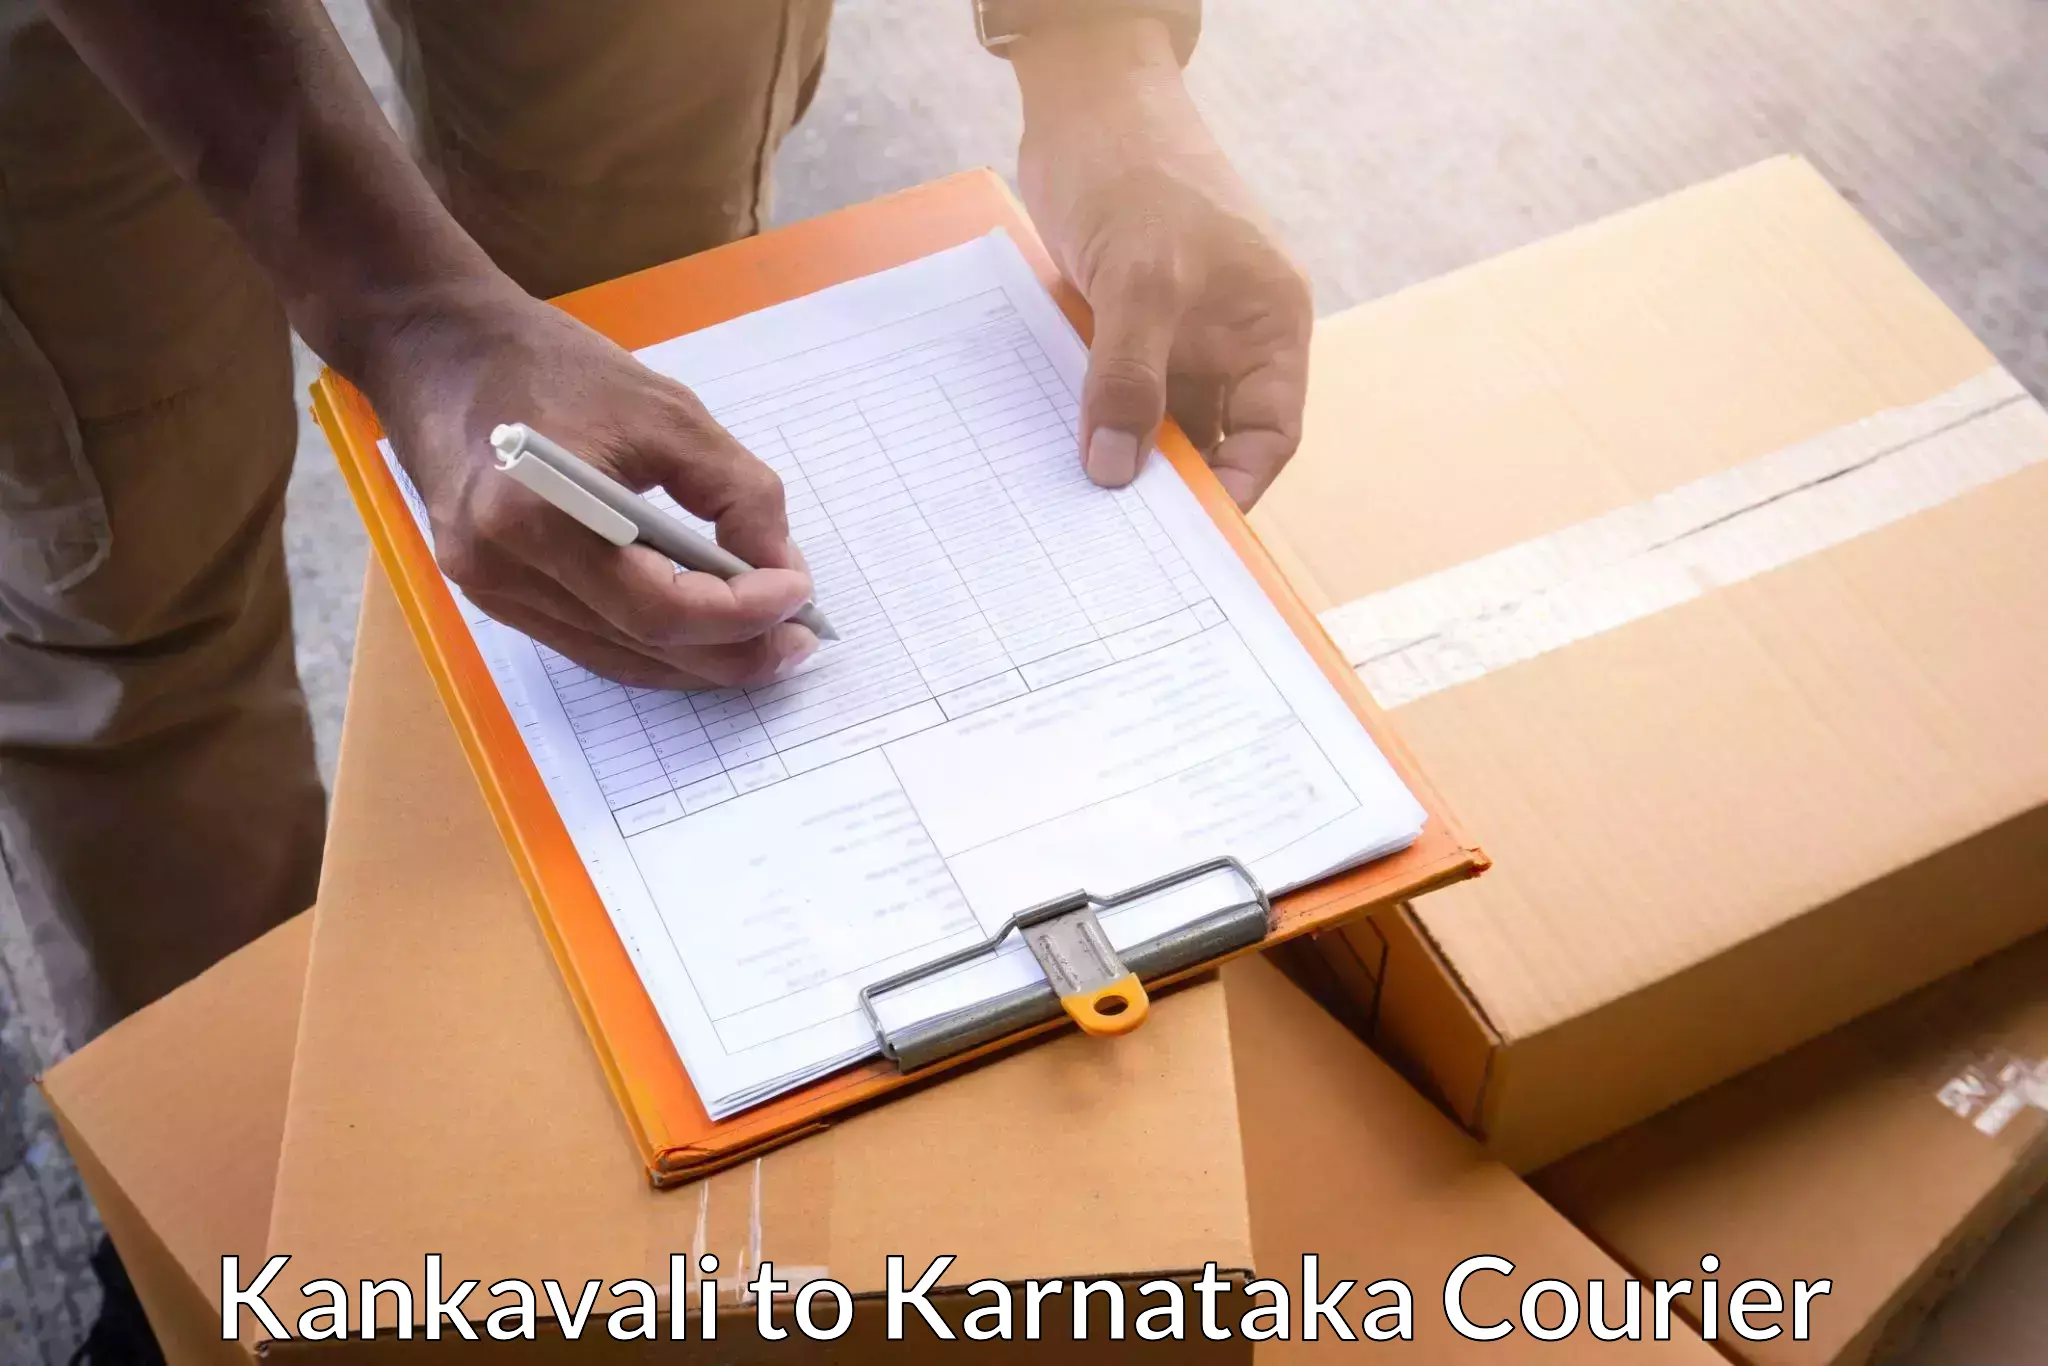 International parcel service Kankavali to Bailhongal